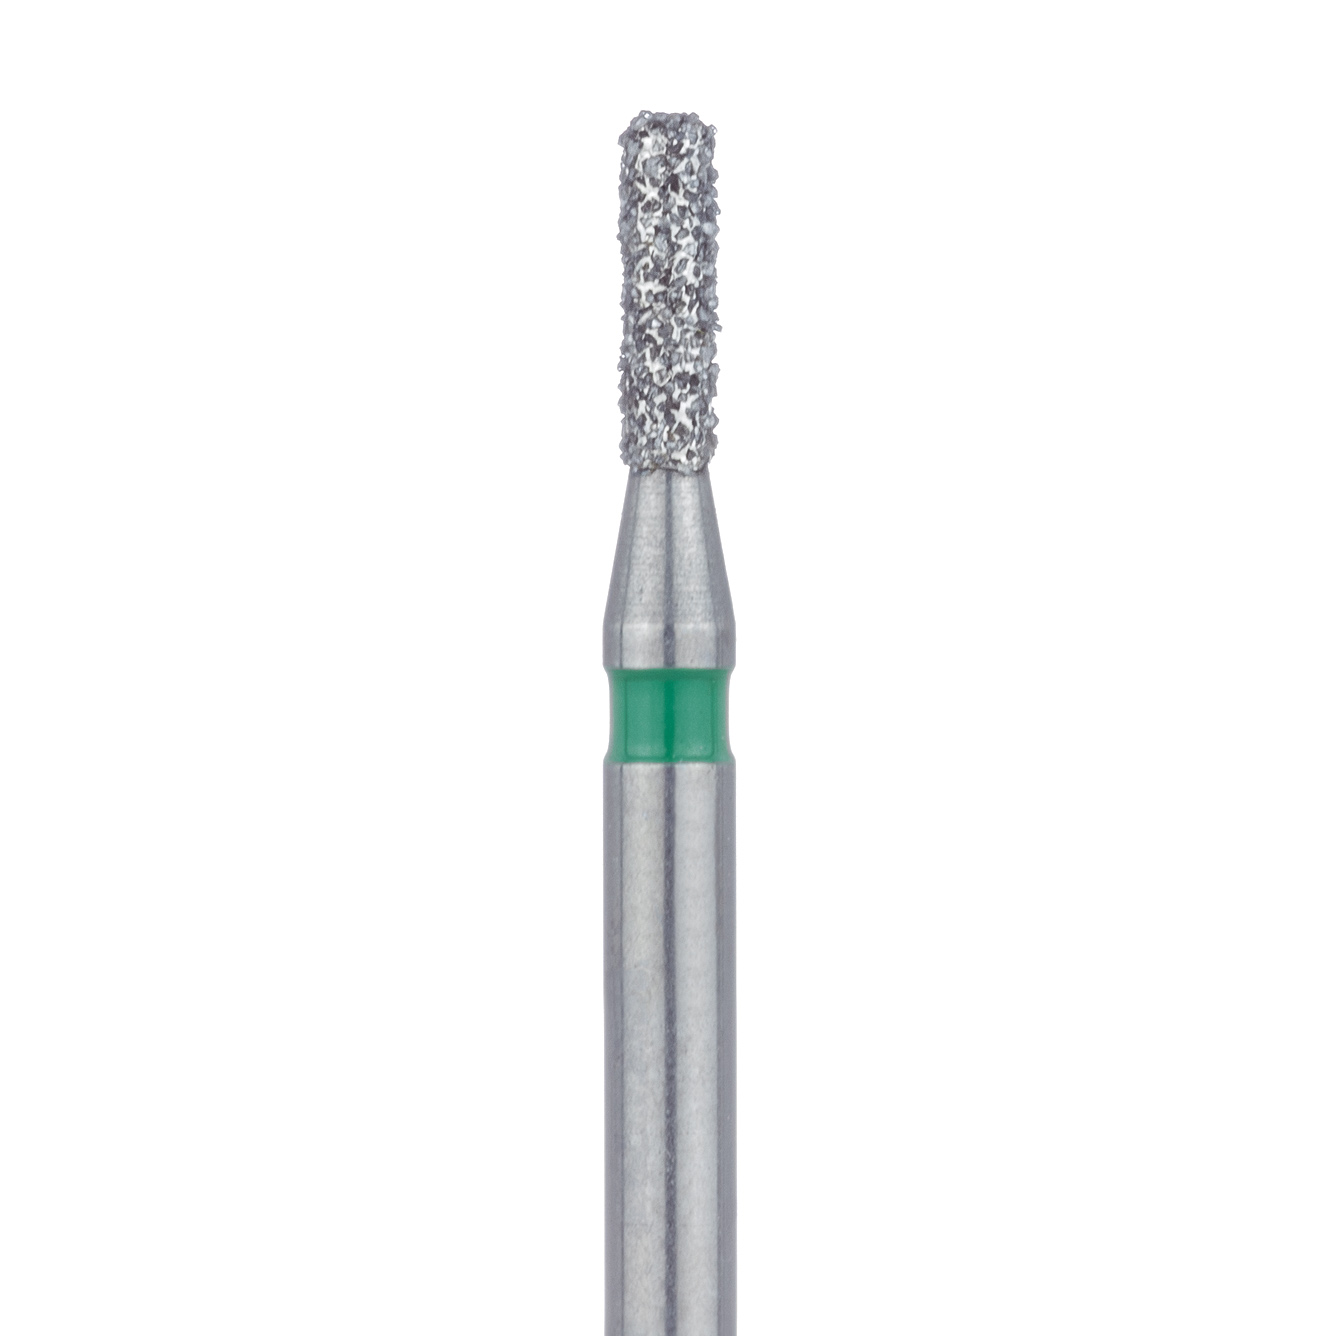 840G-012-FG Round Edge Cylinder Diamond Bur, 1.2mm Ø, Coarse, FG